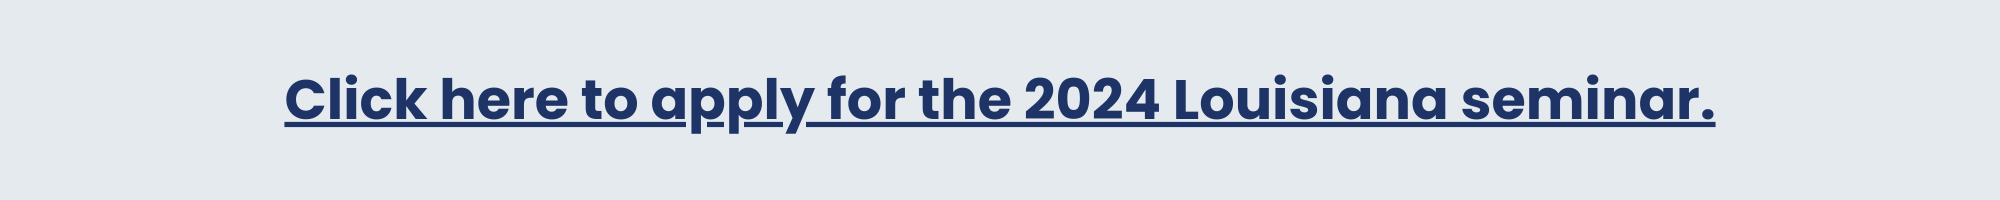 Click here to apply for the 2024 Louisiana seminar.